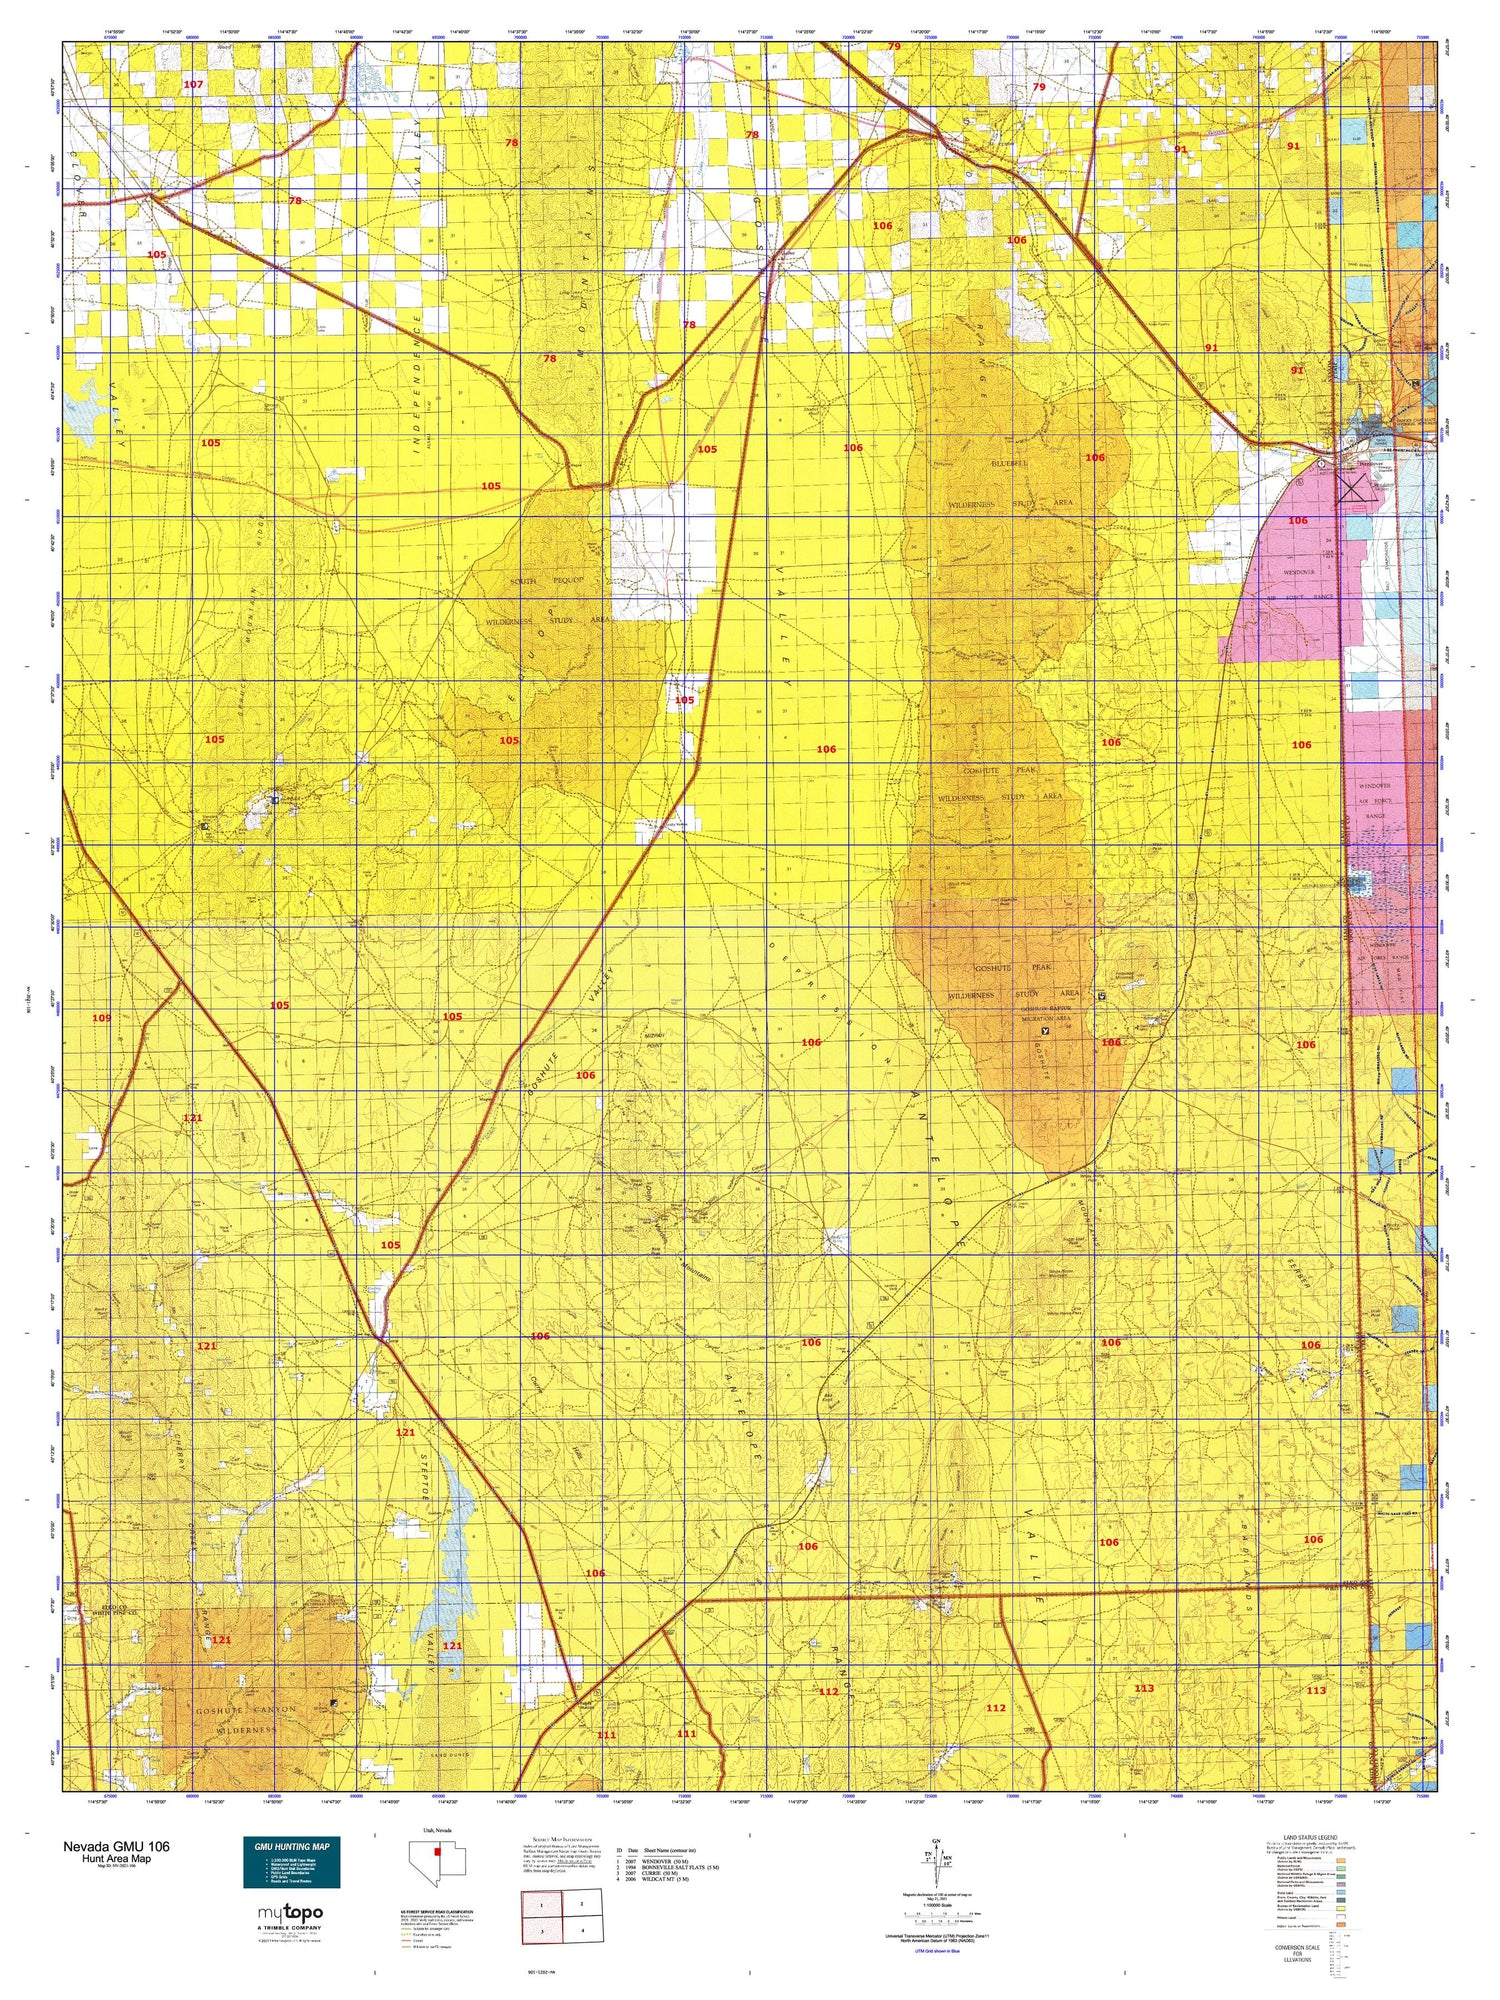 Nevada GMU 106 Map Image